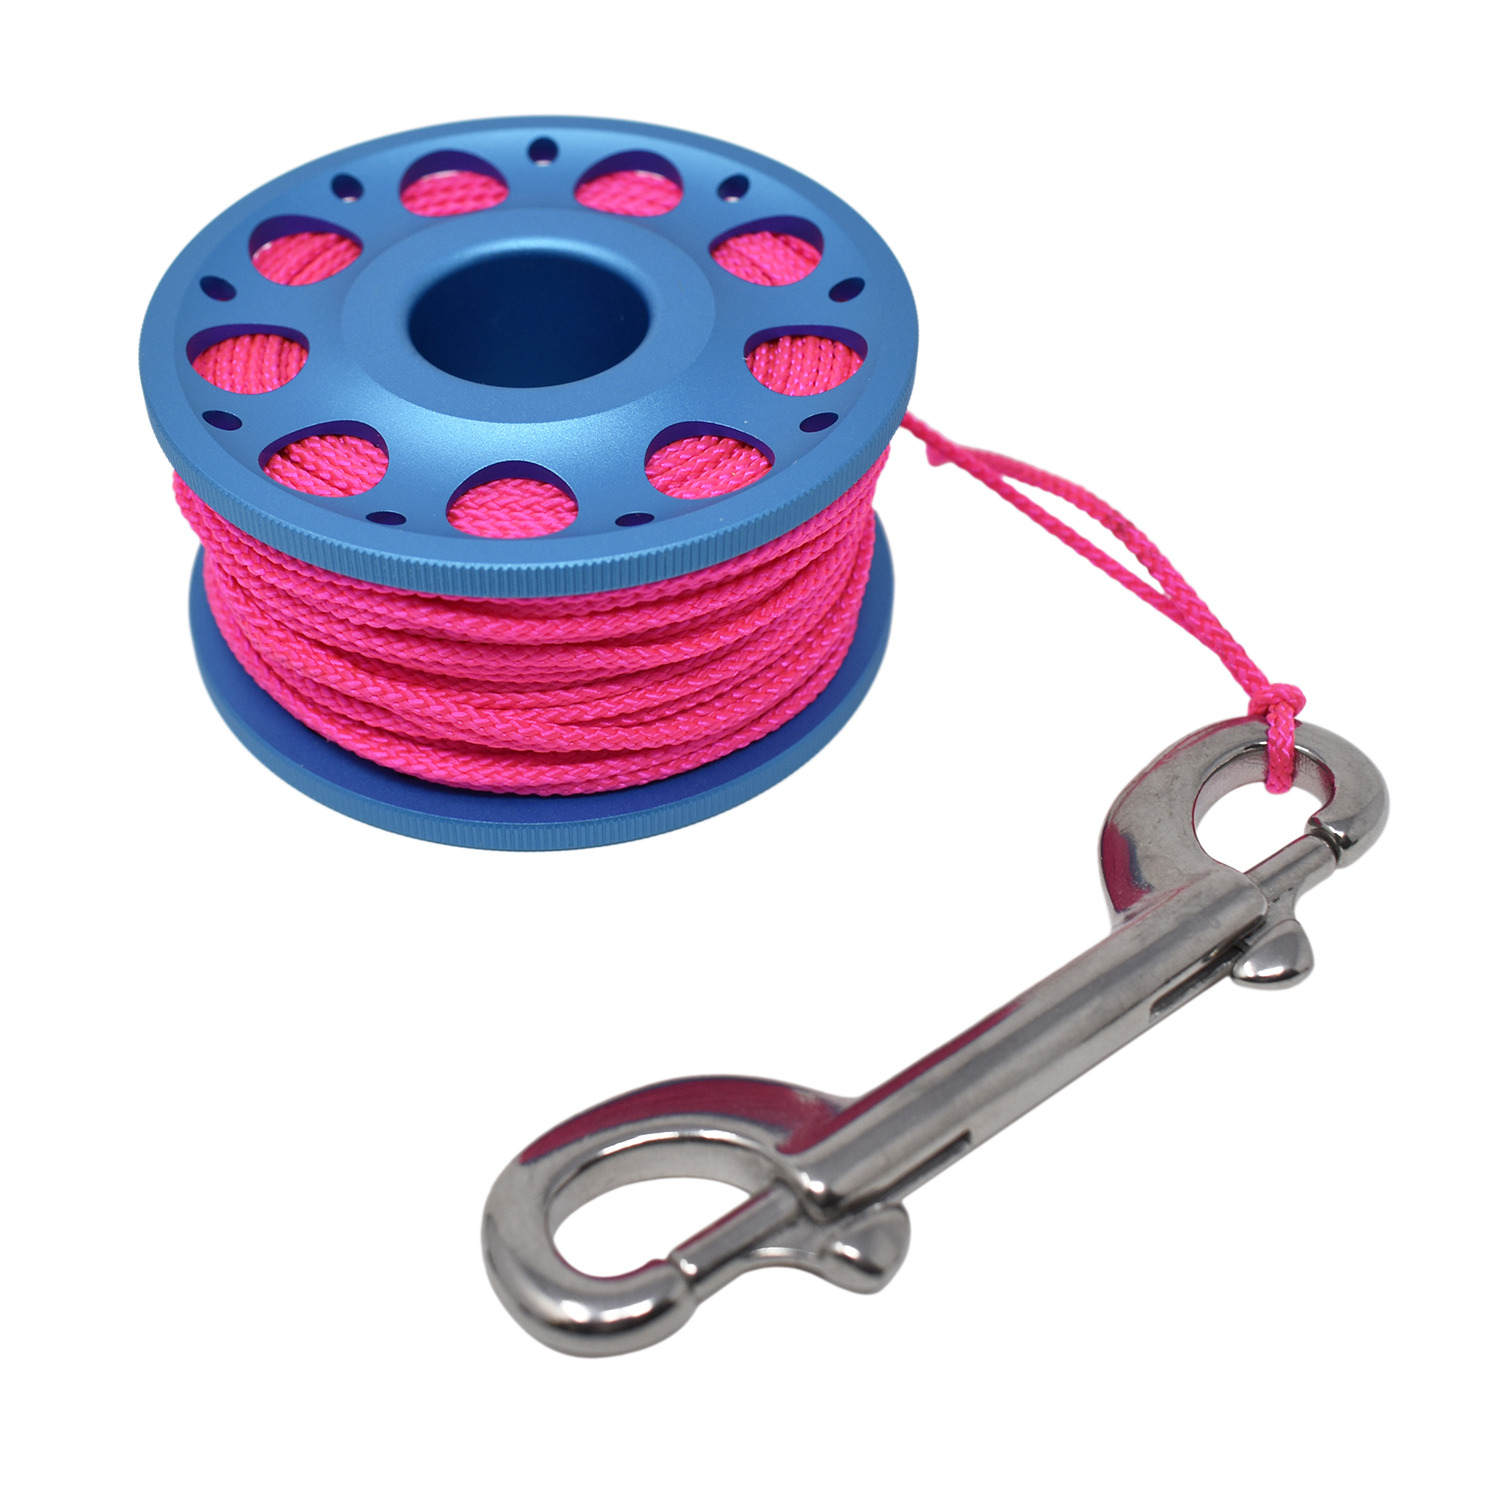 Aluminum Finger Spool 100ft Dive Reel w/ Spinning Holder, Baby Blue/Pink - image 2 of 3